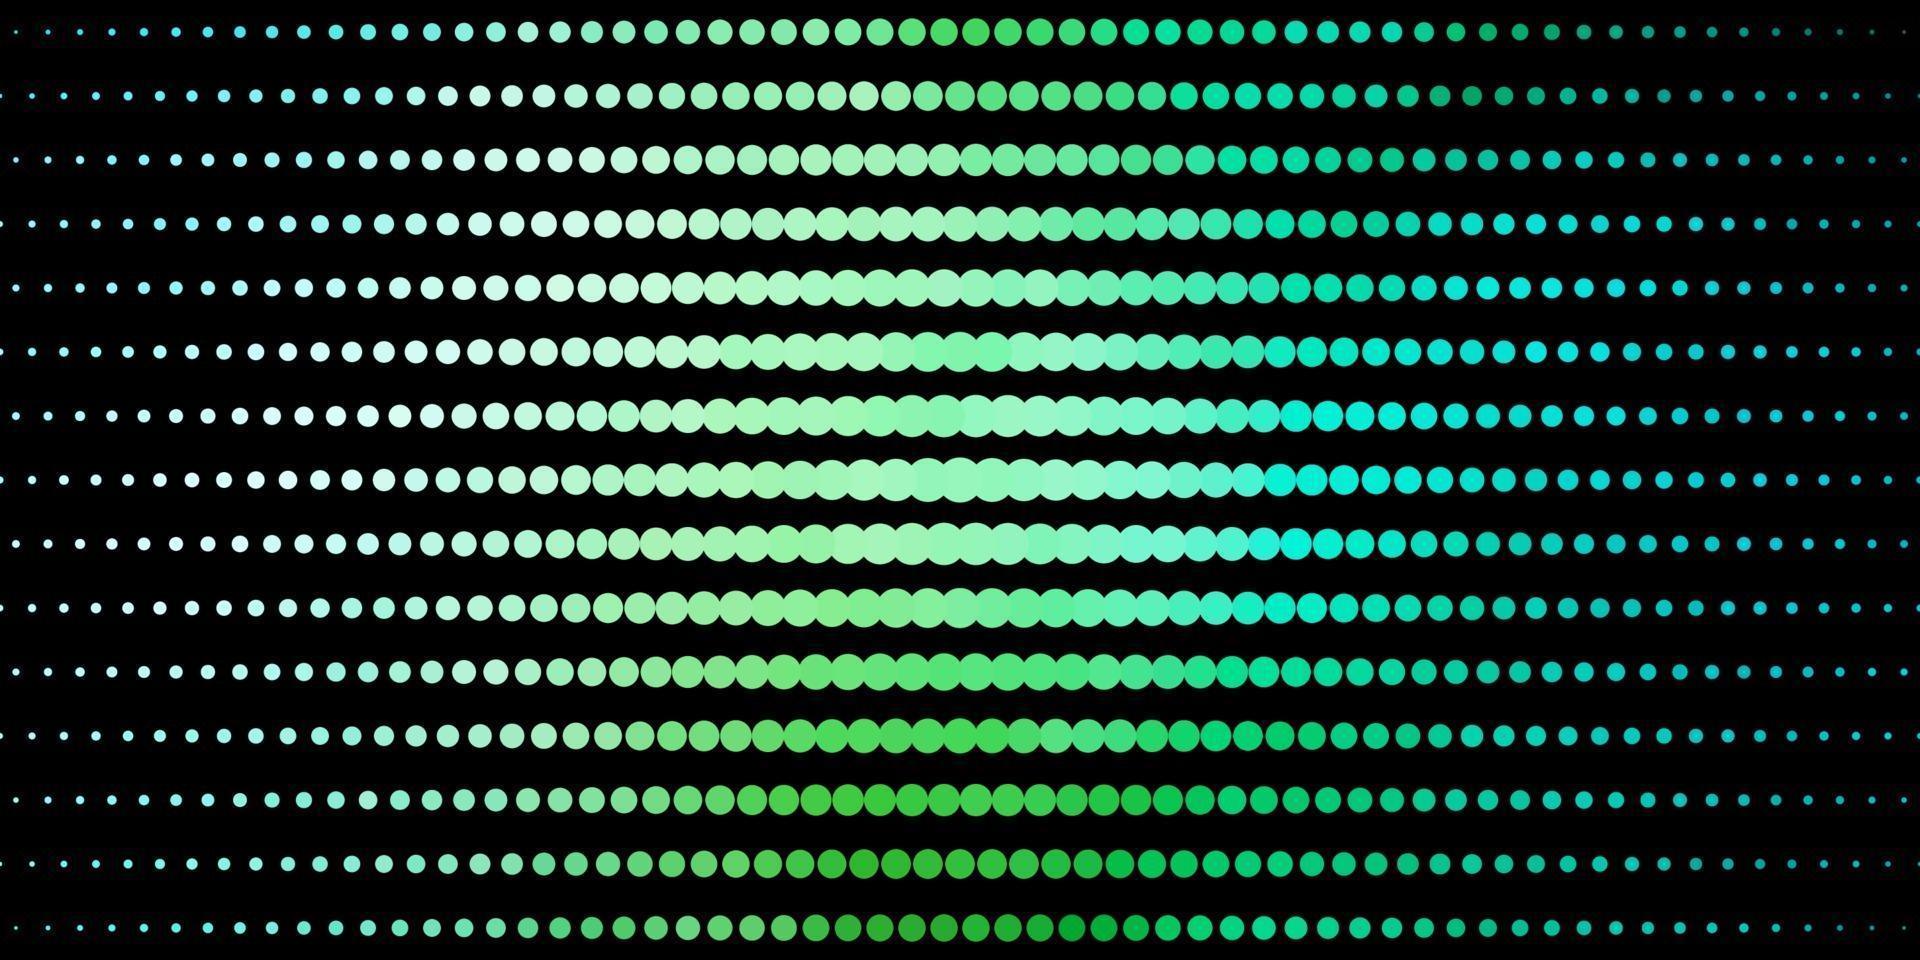 pano de fundo vector azul e verde claro com círculos.